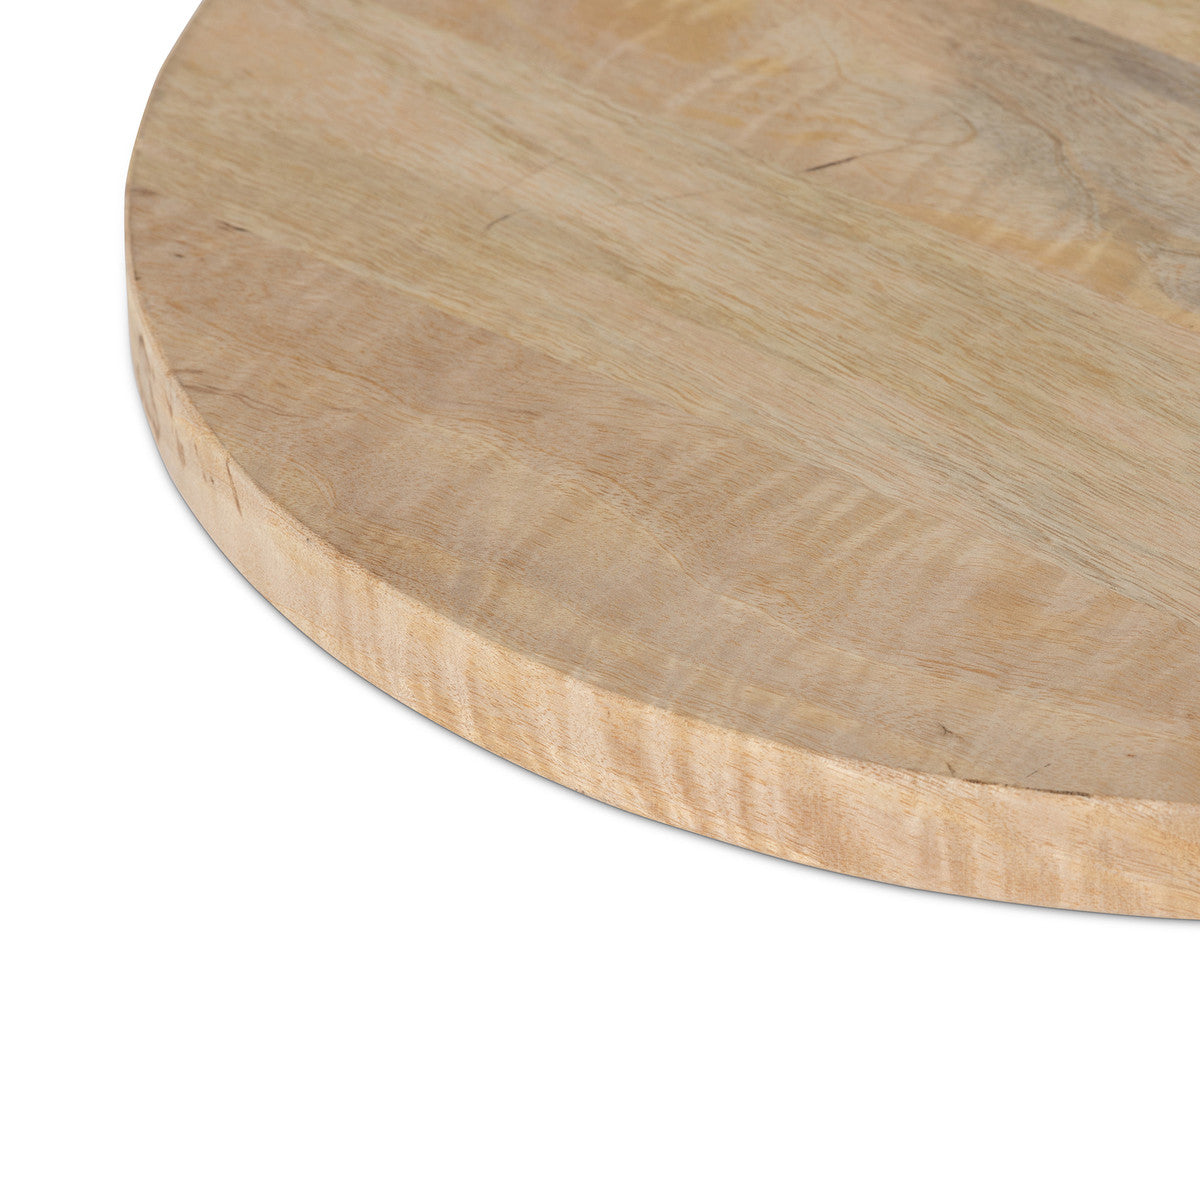 Round Cutting Board - Large